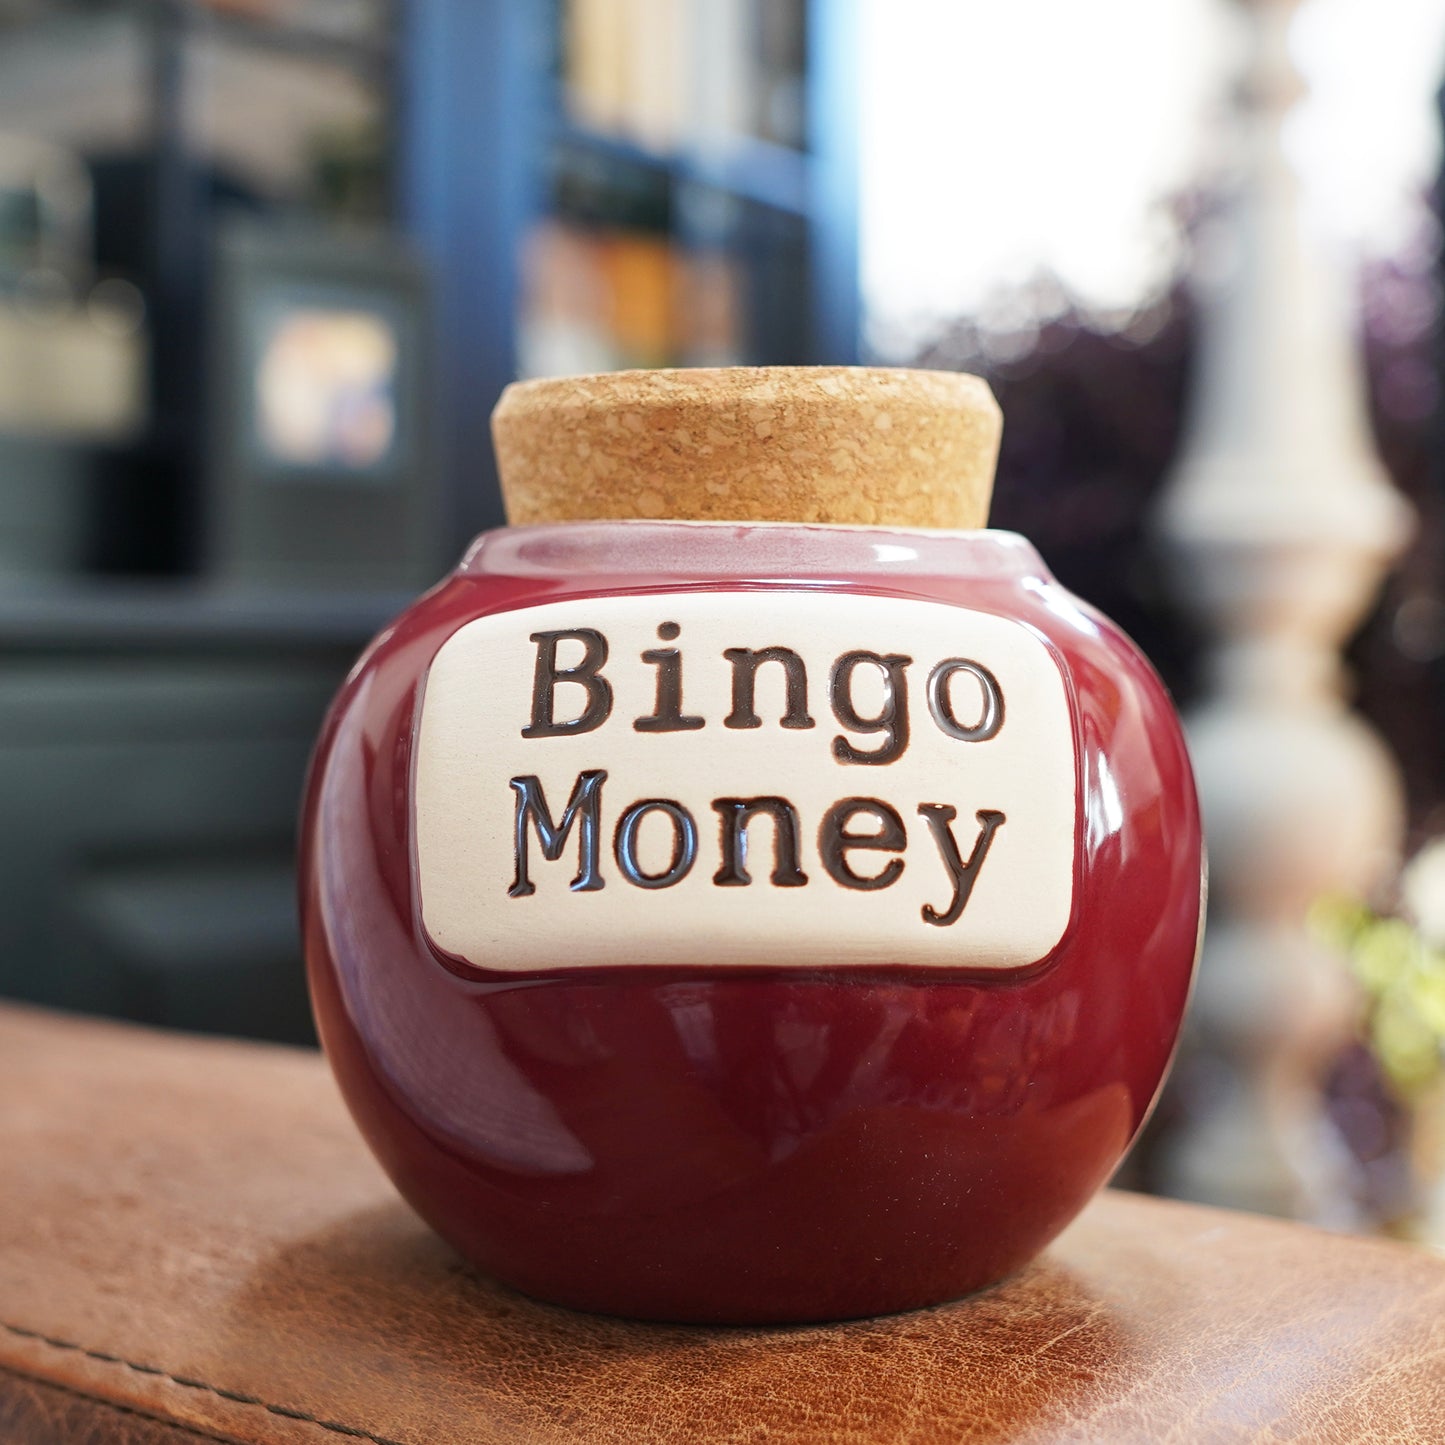 Cottage Creek Bingo Money Piggy Bank, Red, Ceramic, 6" Candy Jar, Bingo Gifts for Bingo Lovers